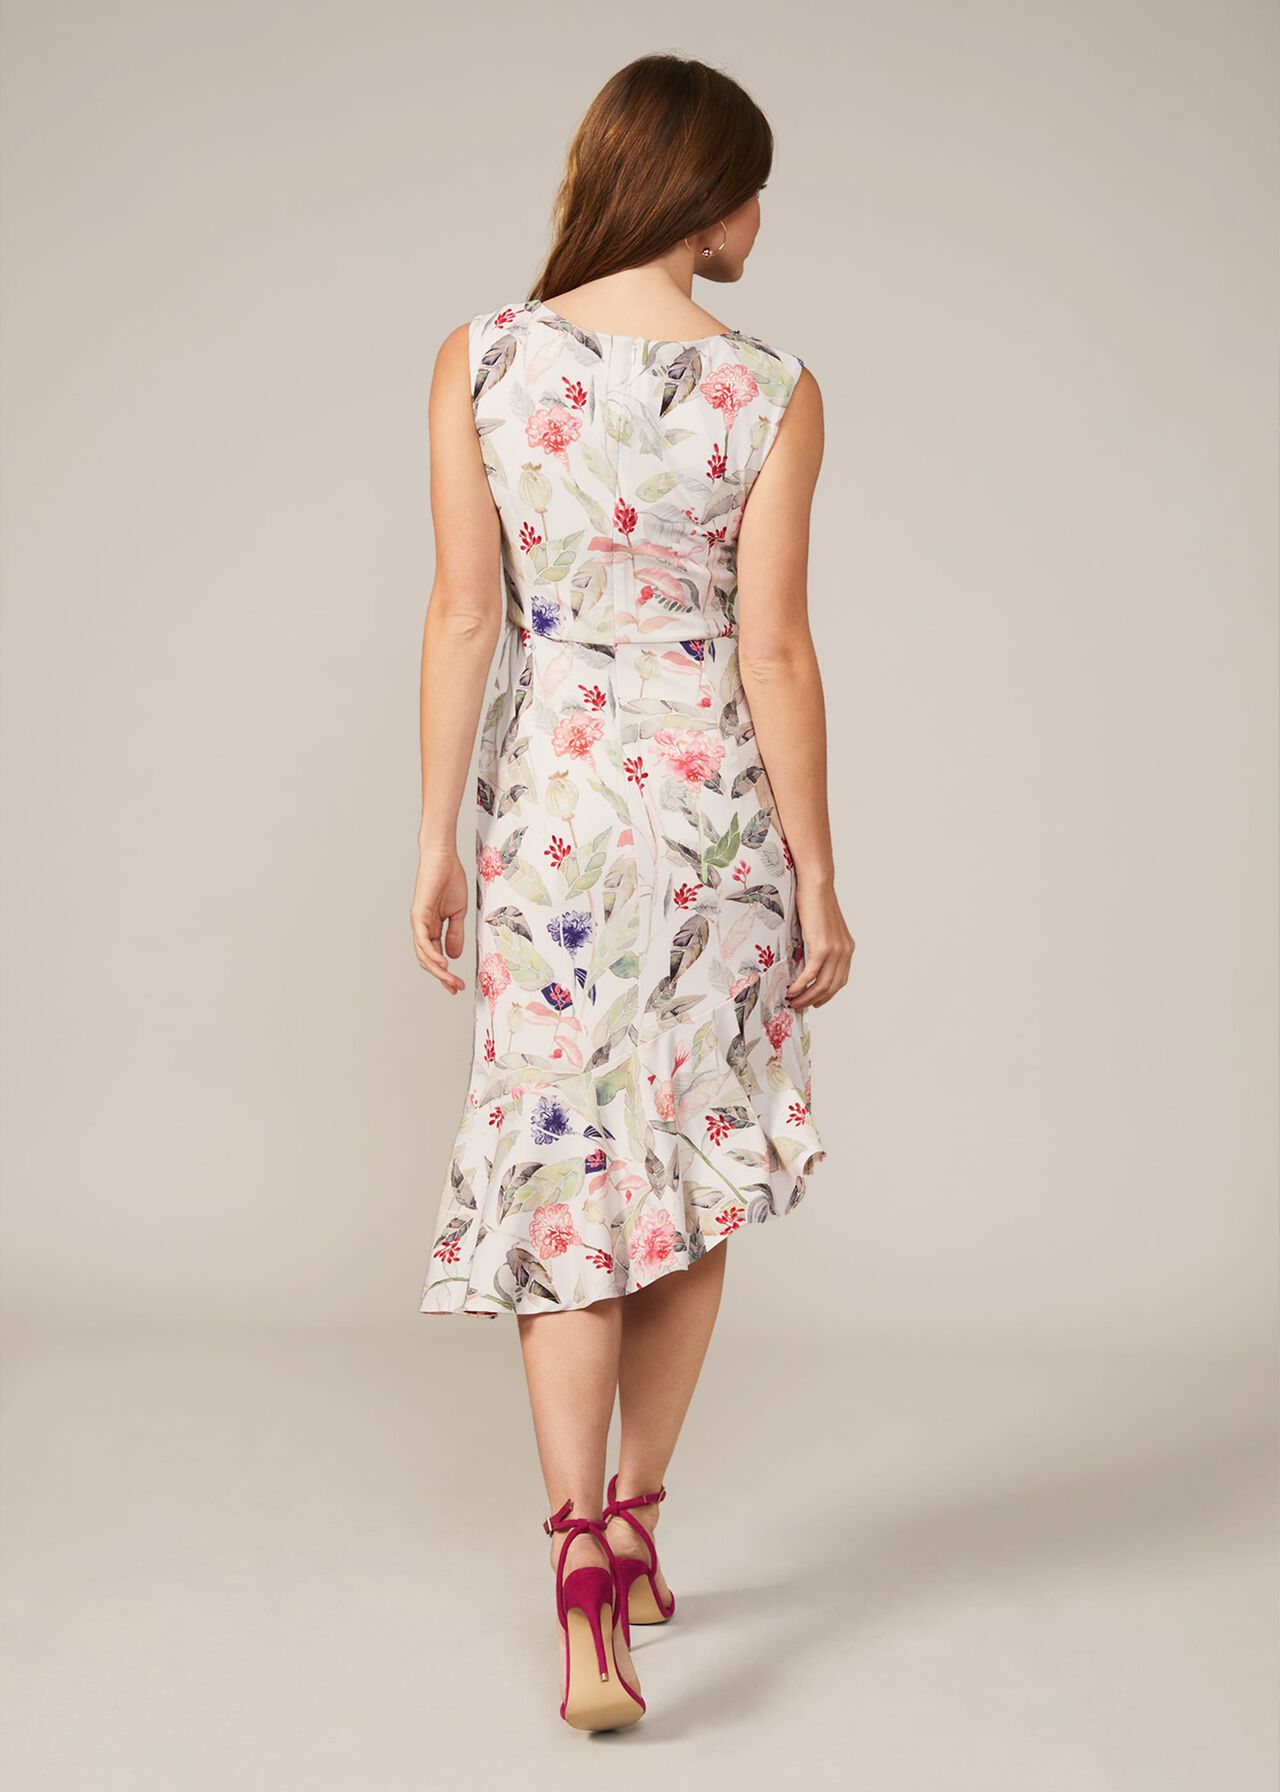 Dulcie Floral Jersey Dress